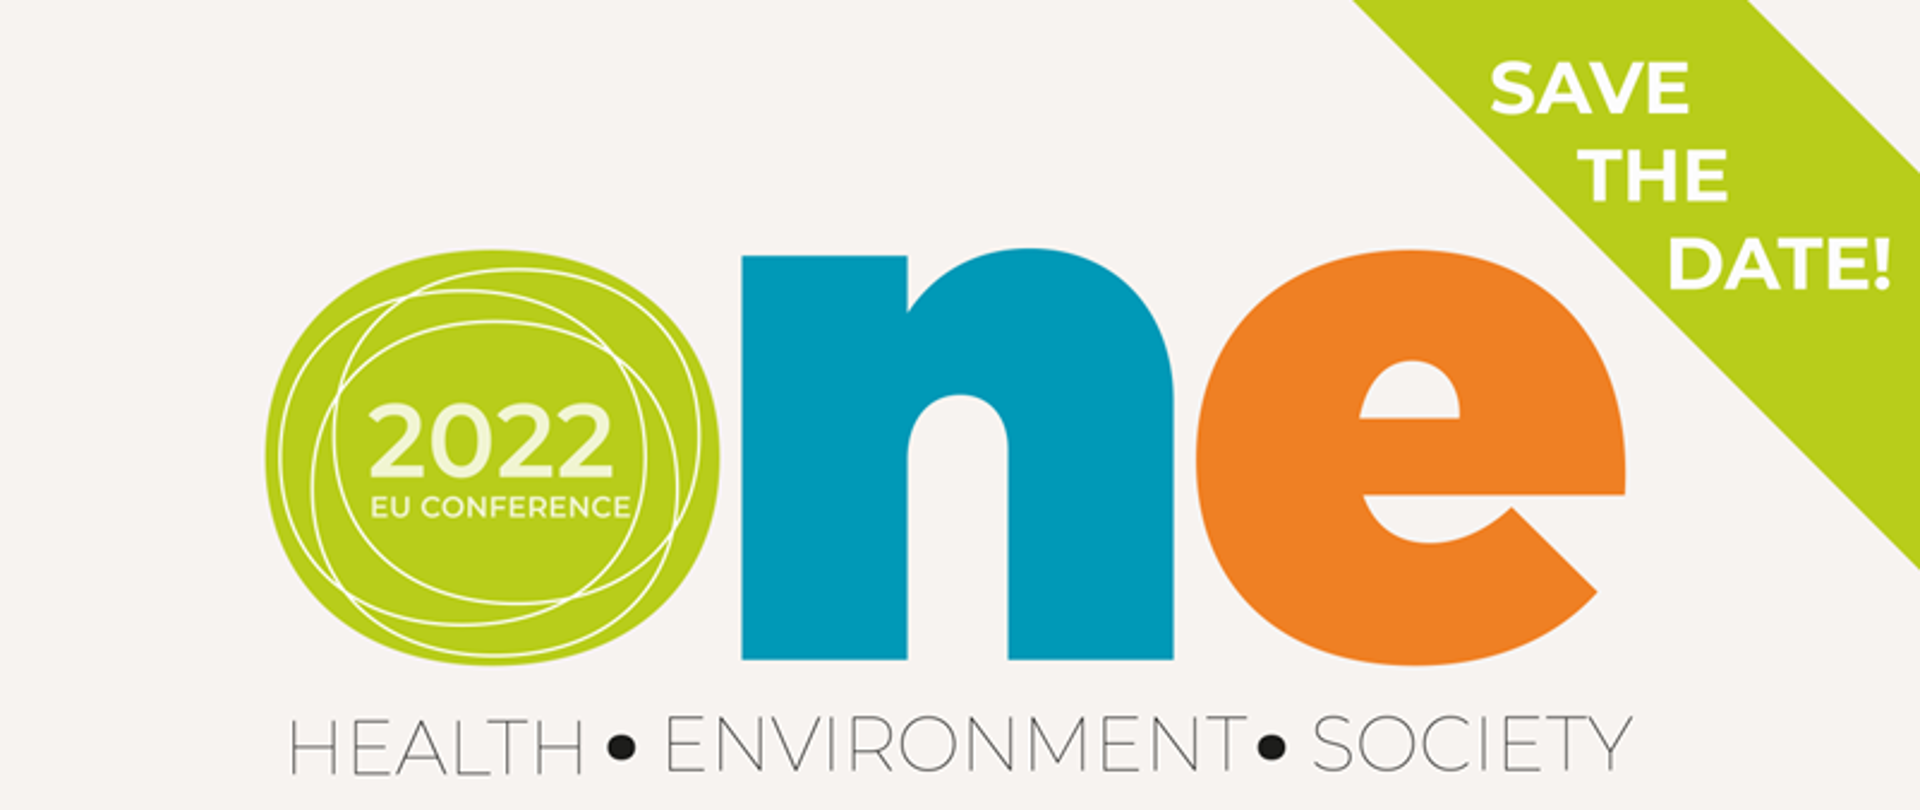 Konferencja - logo i napis One Health, Environment, Society 